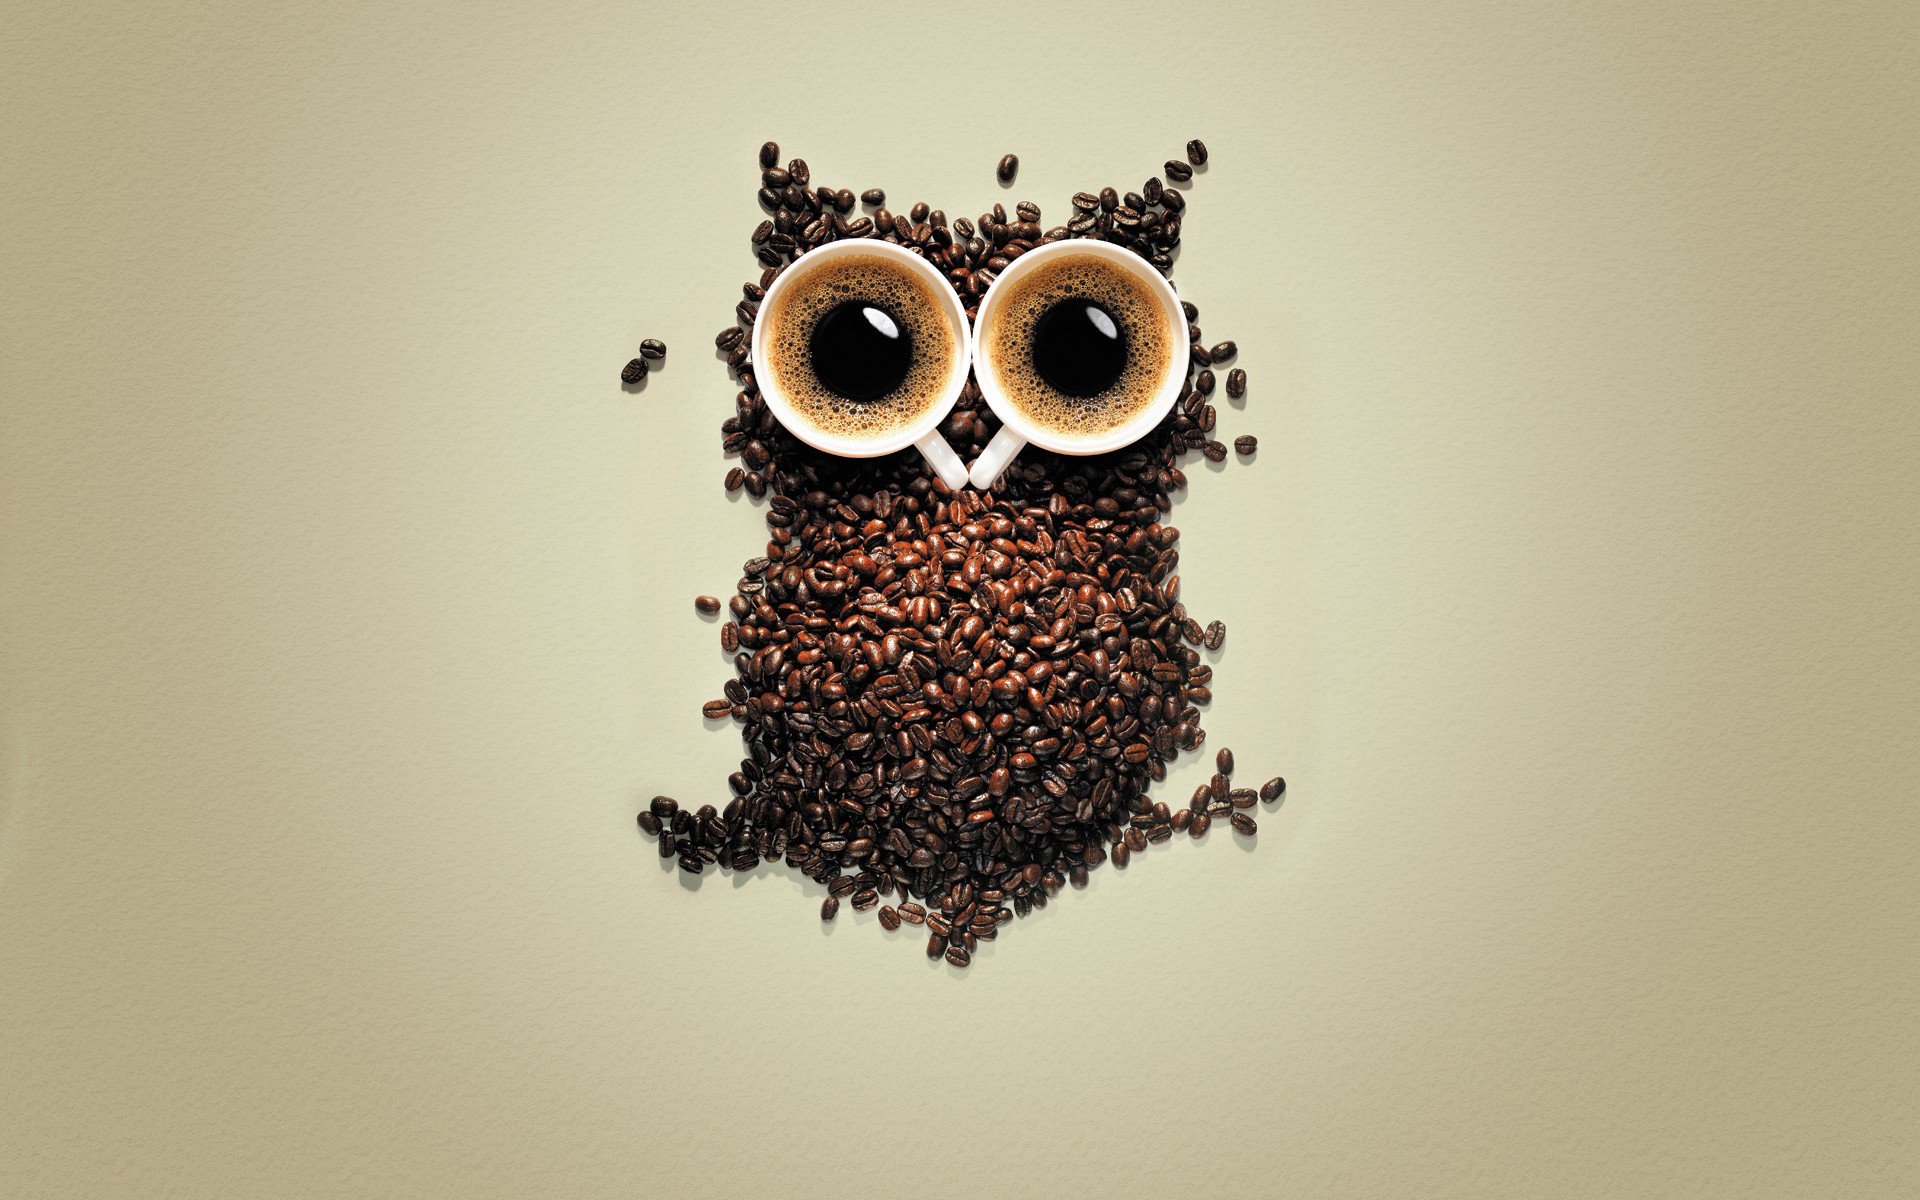  Coffee Owl Google Wallpapers Night Coffee Owl Google Backgrounds